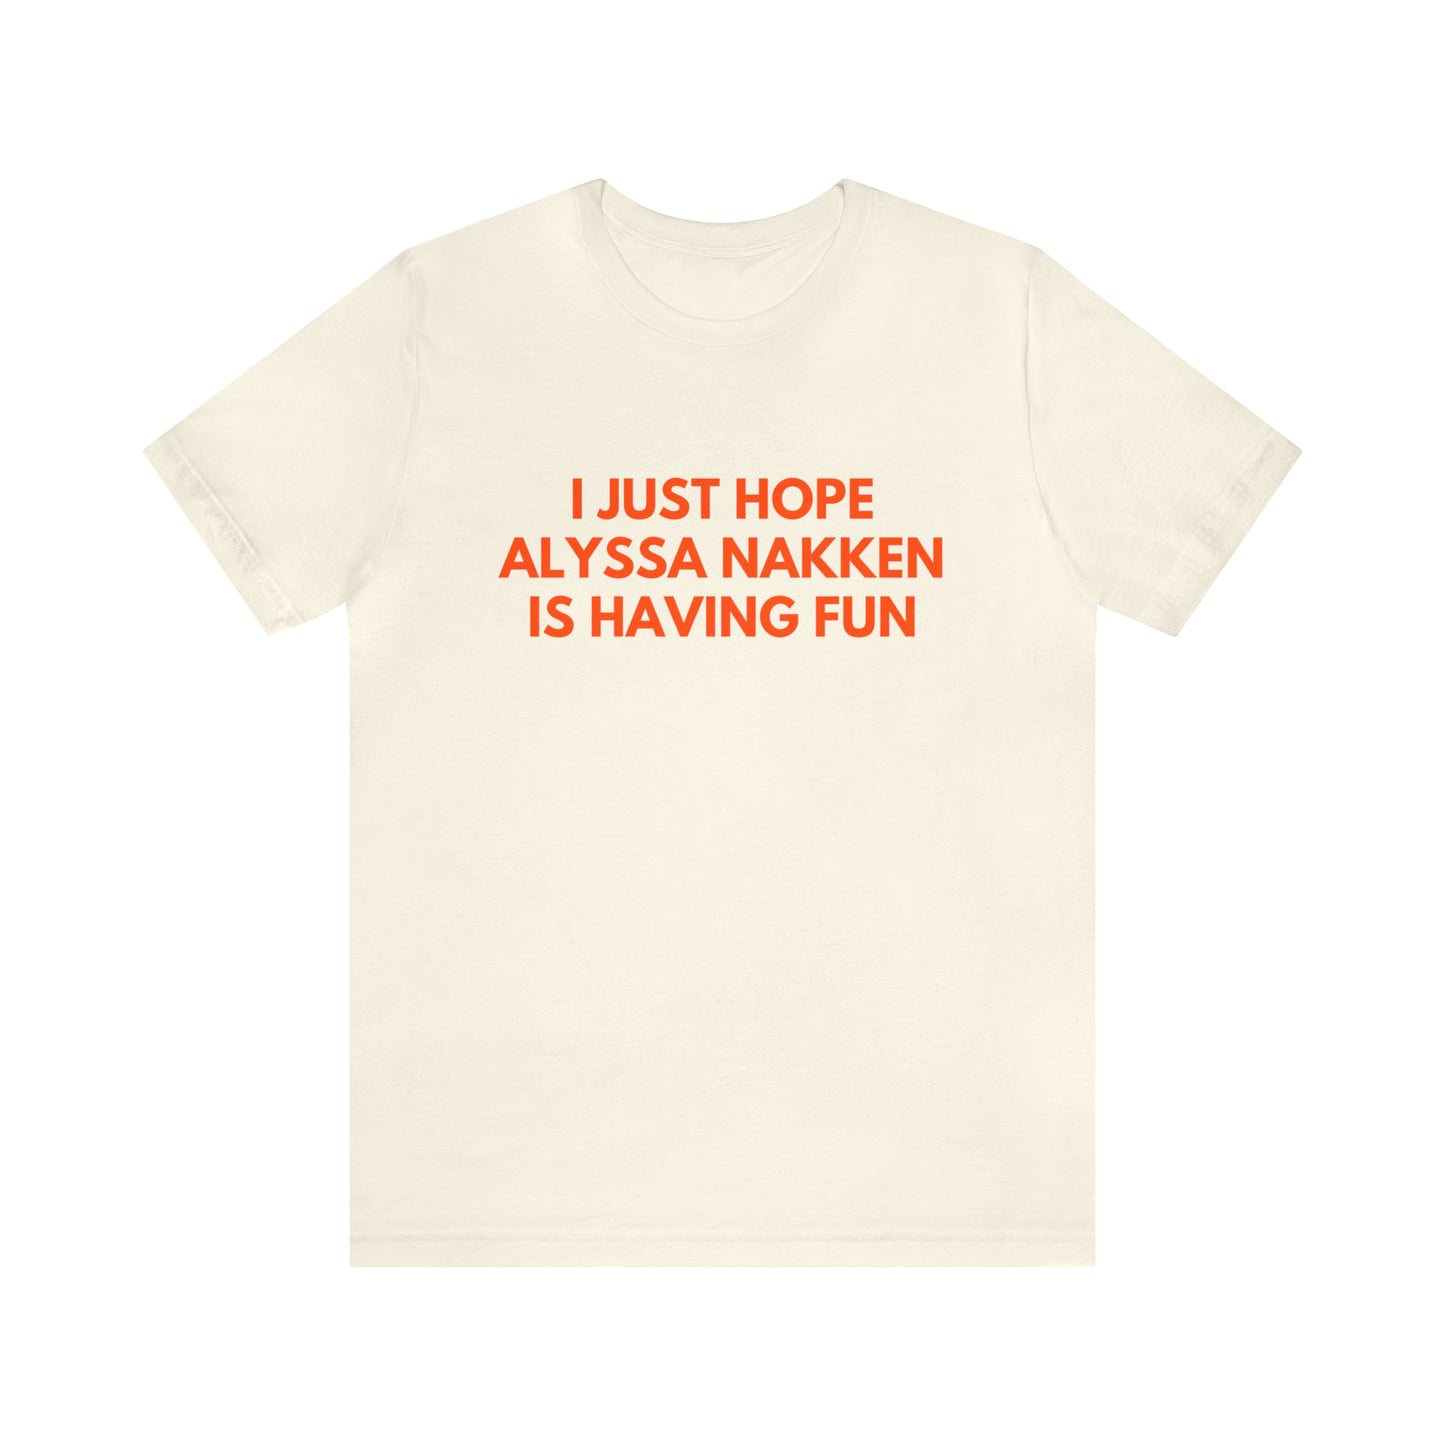 Alyssa Nakken Having Fun - Unisex T-shirt